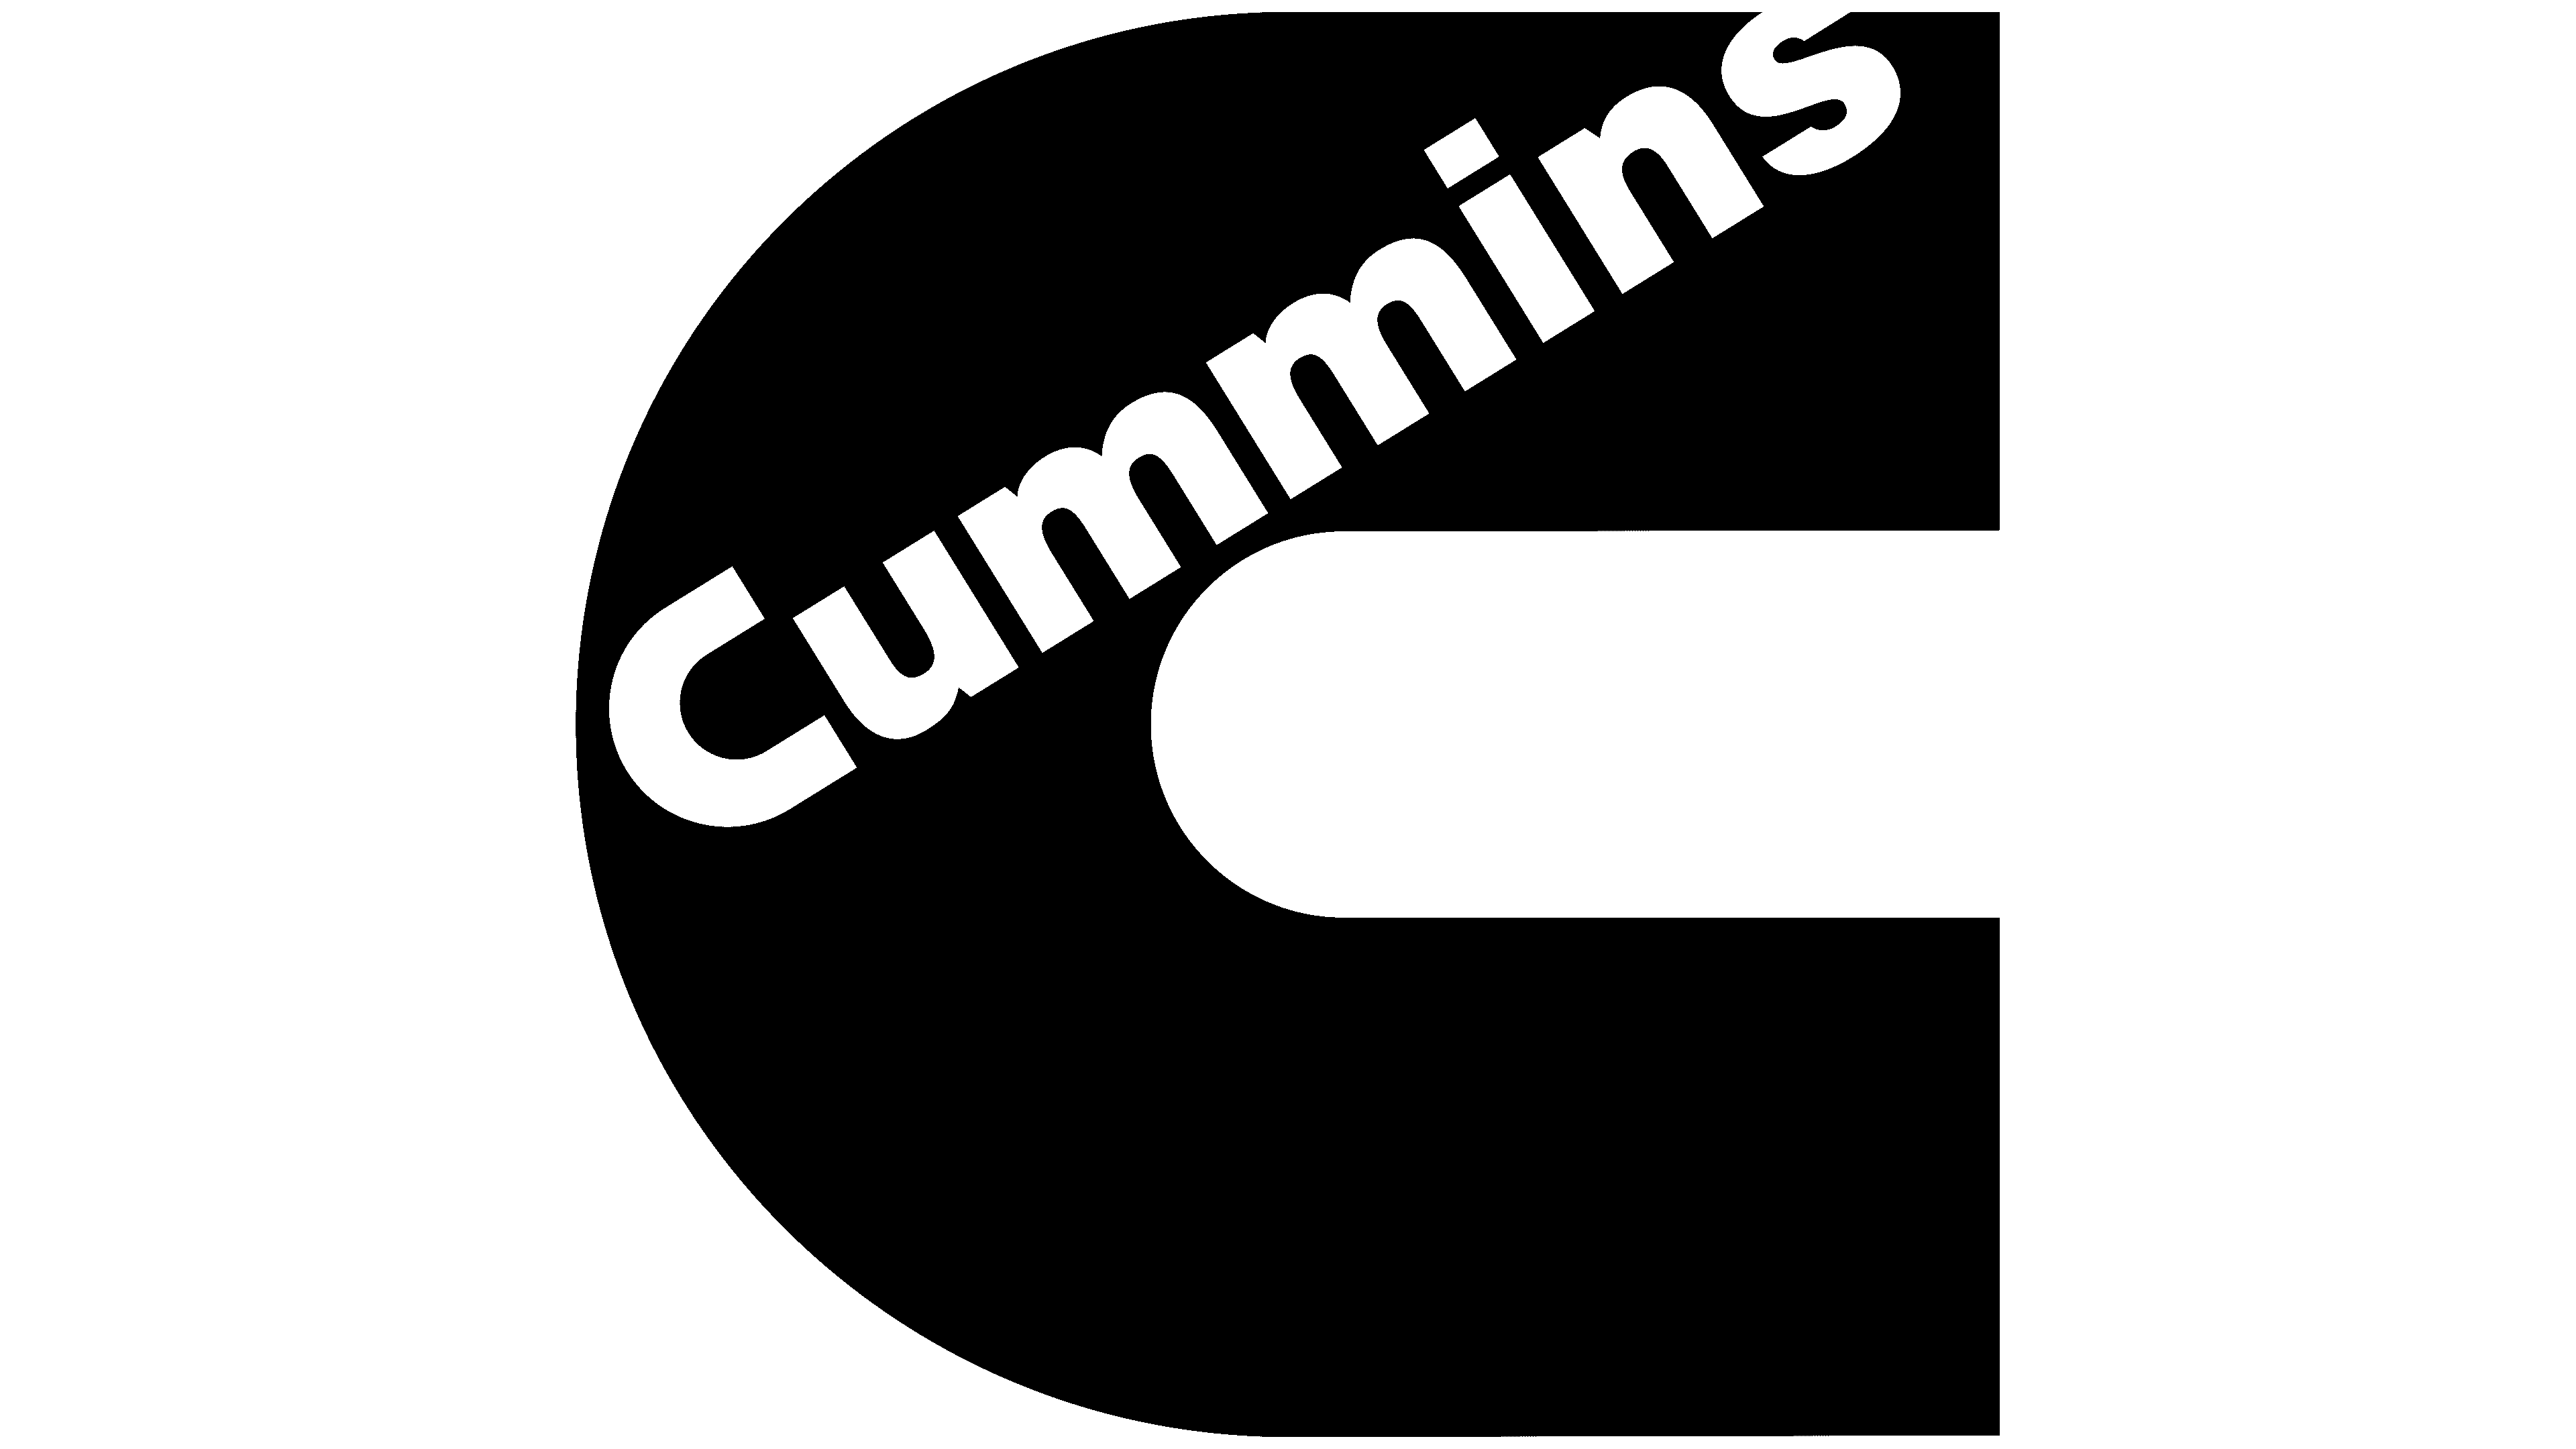 Cummins c logo cvs health warehouse glassdoor